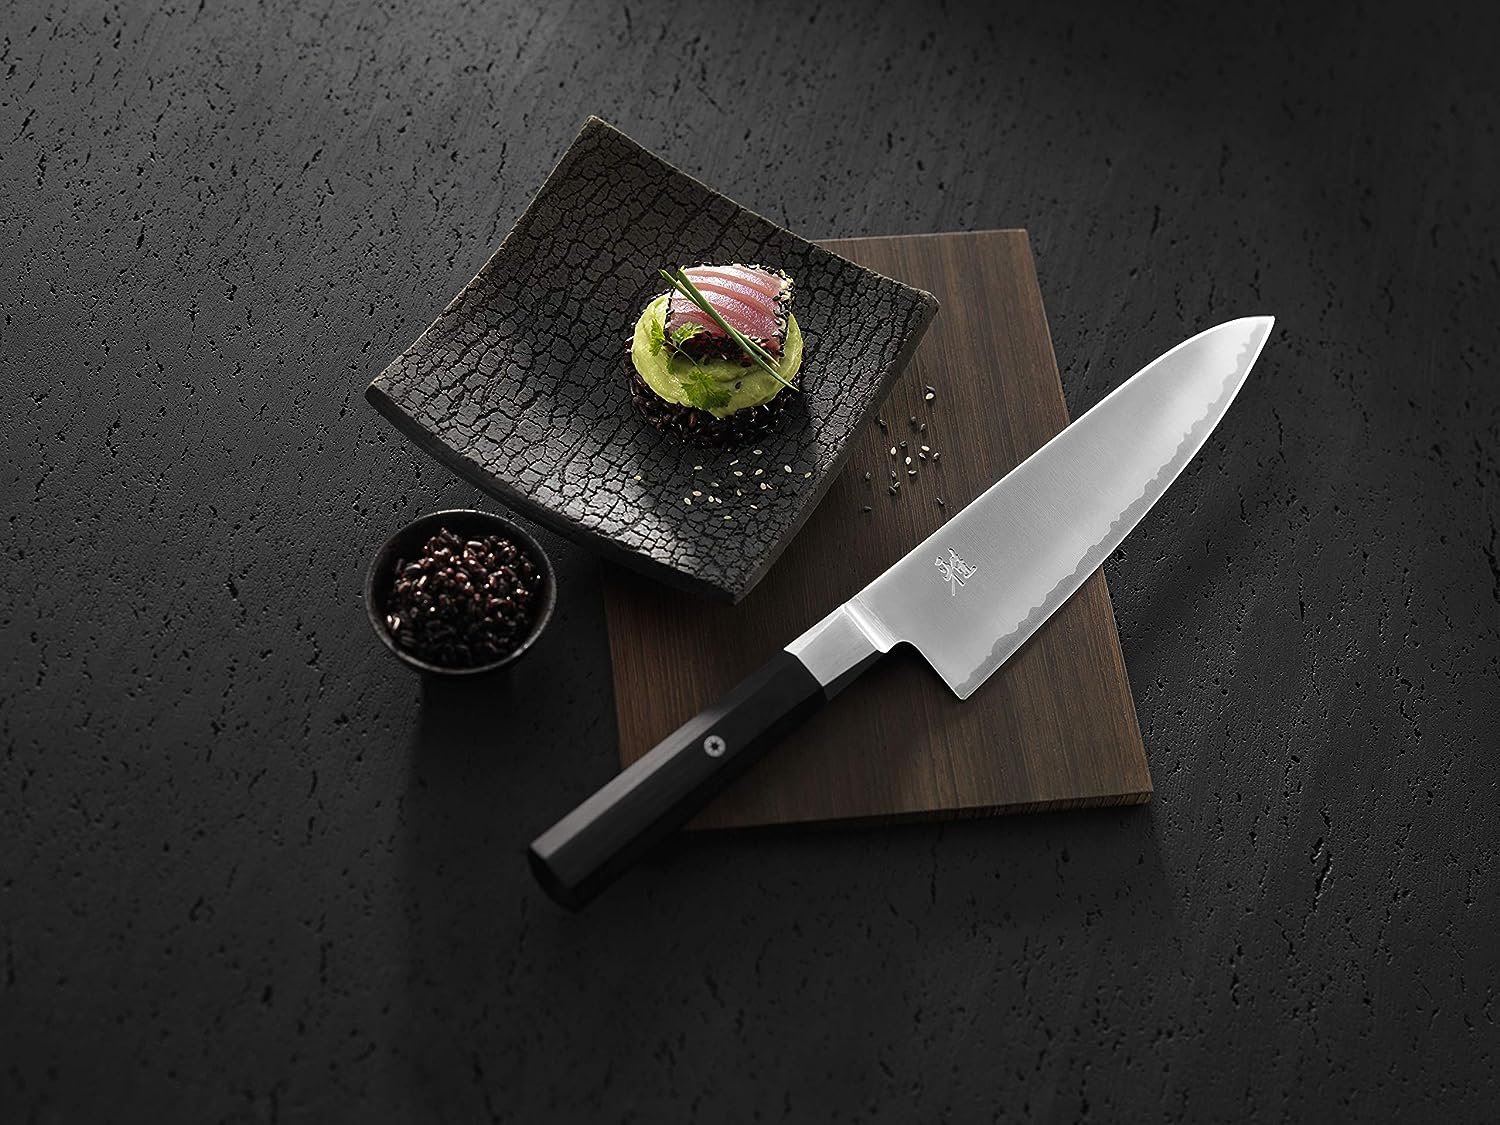 Miyabi Koh 8-inch Chefs Knife, Stainless Steel